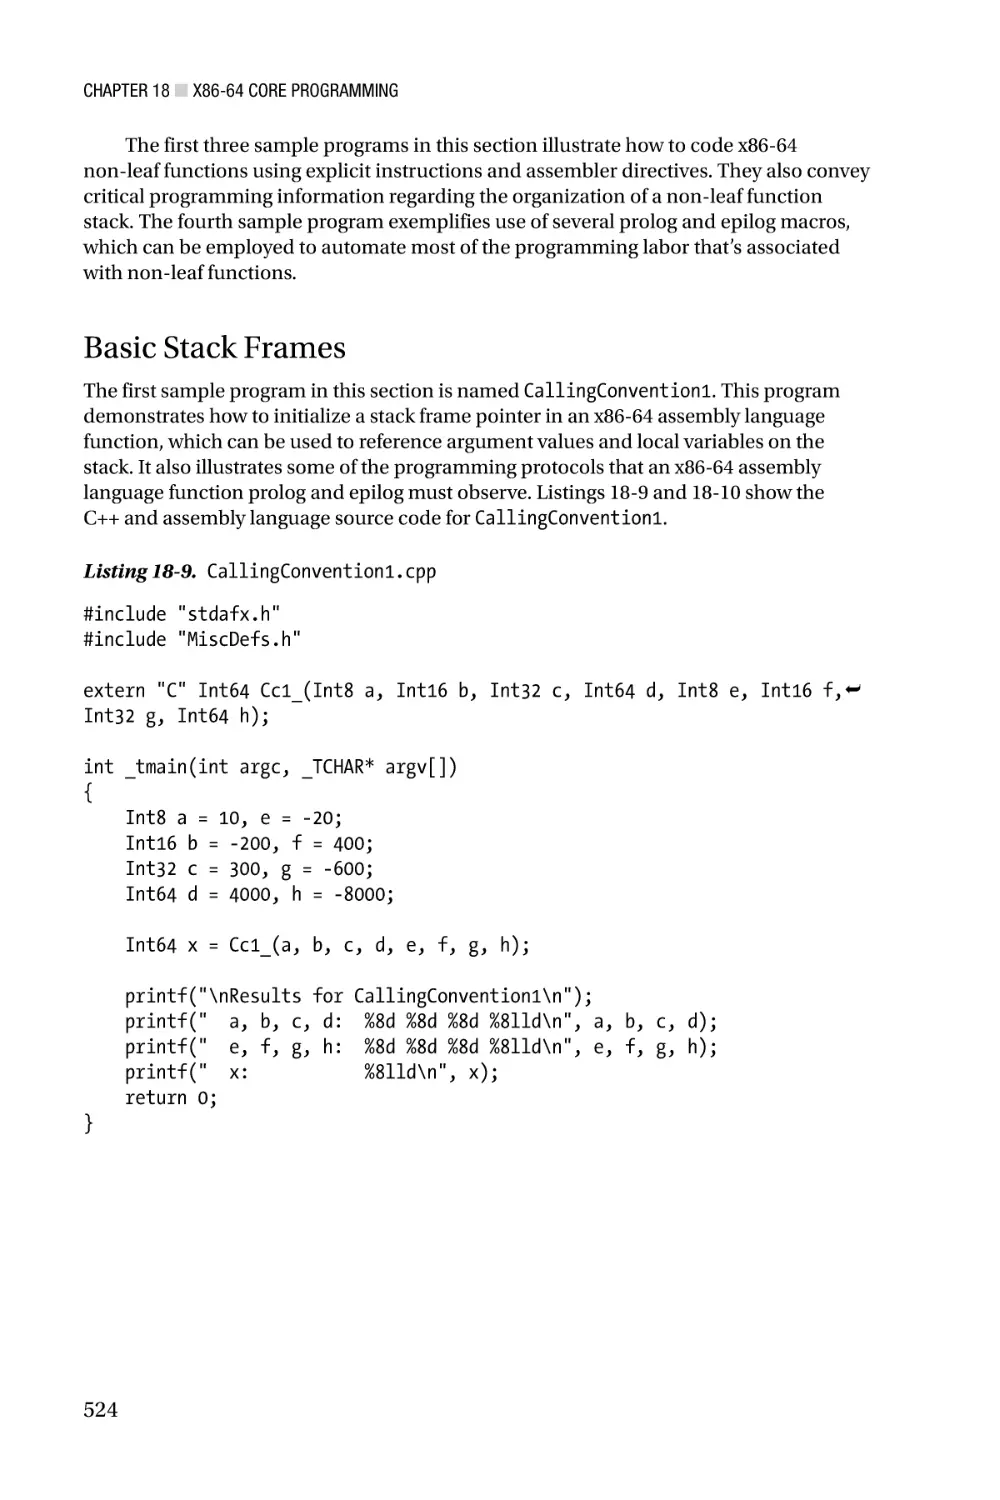 Basic Stack Frames